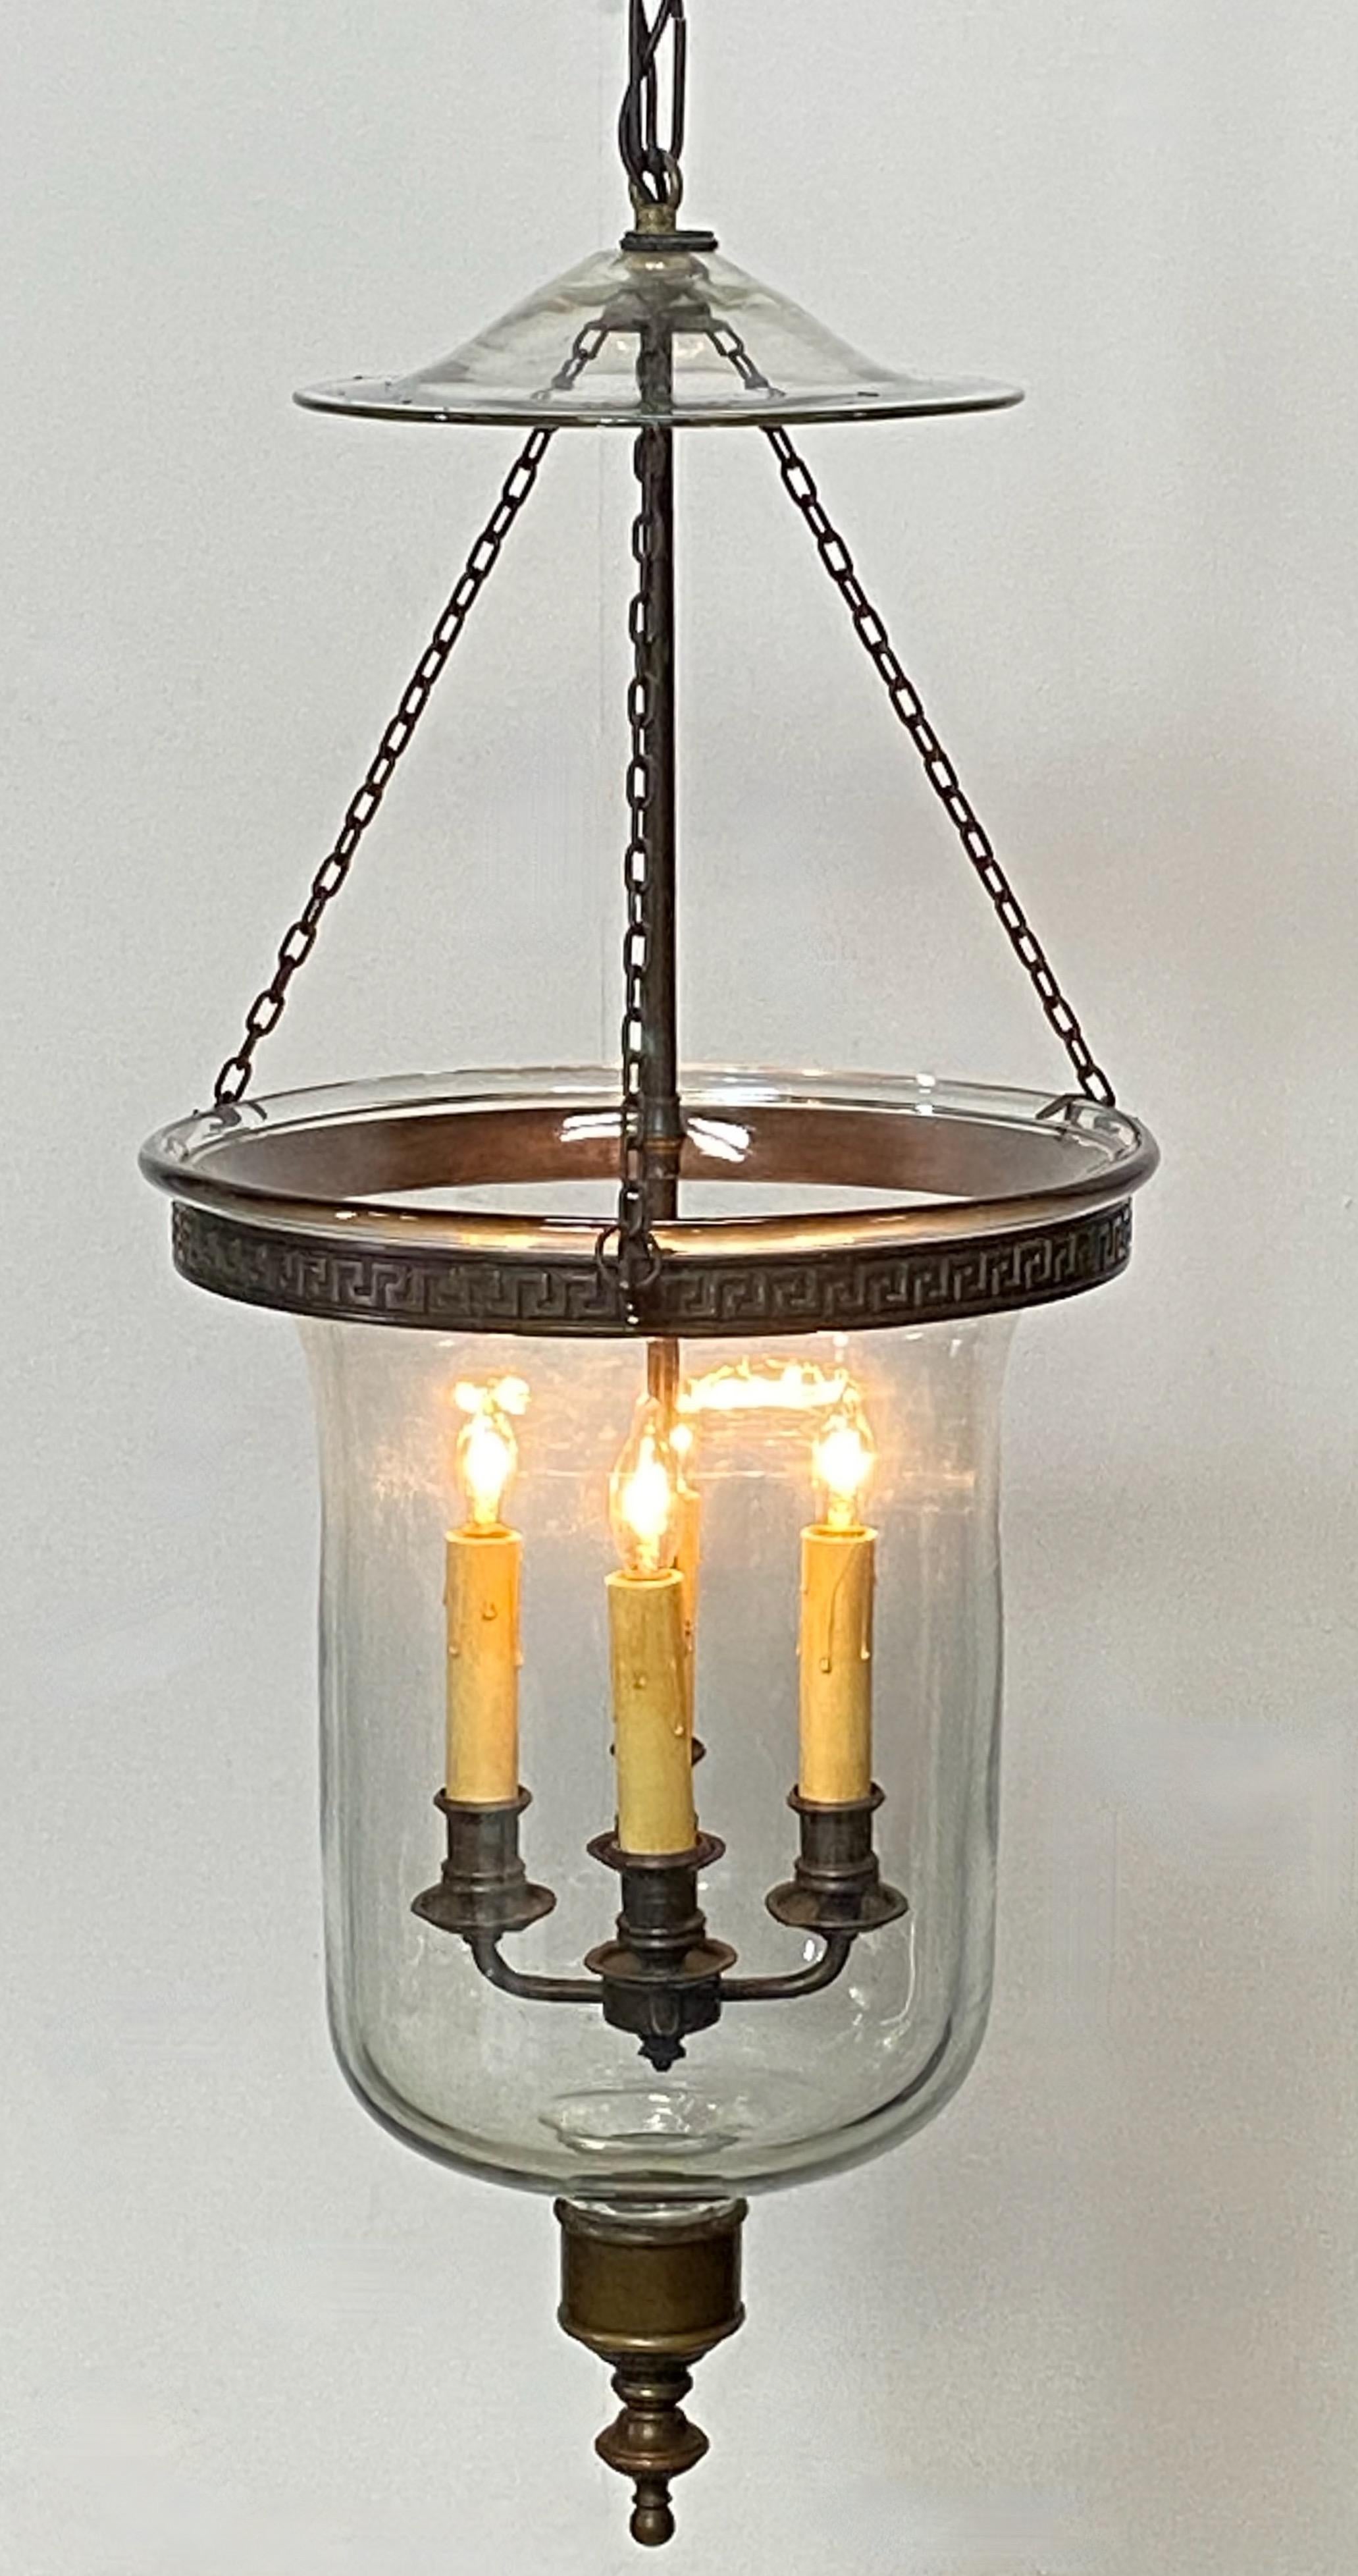 20th Century Vintage Bronze and Glass Hurricane Lantern Pendant Light Fixture